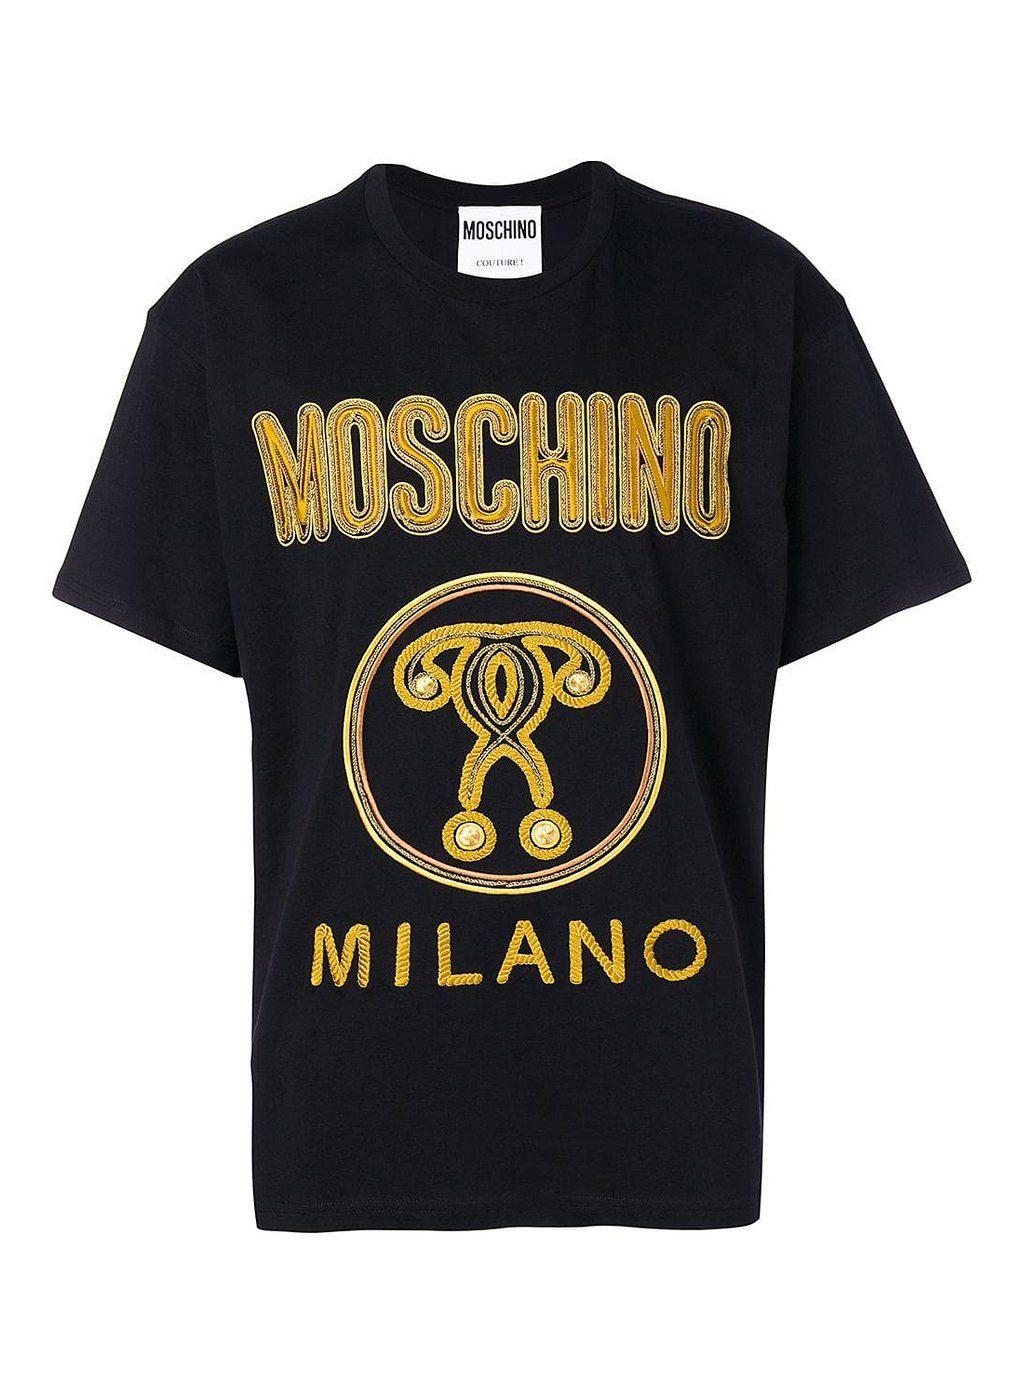 Moschino Gold Logo - Moschino Gold Rope Question Mark Tee - Black | Philip Browne Menswear